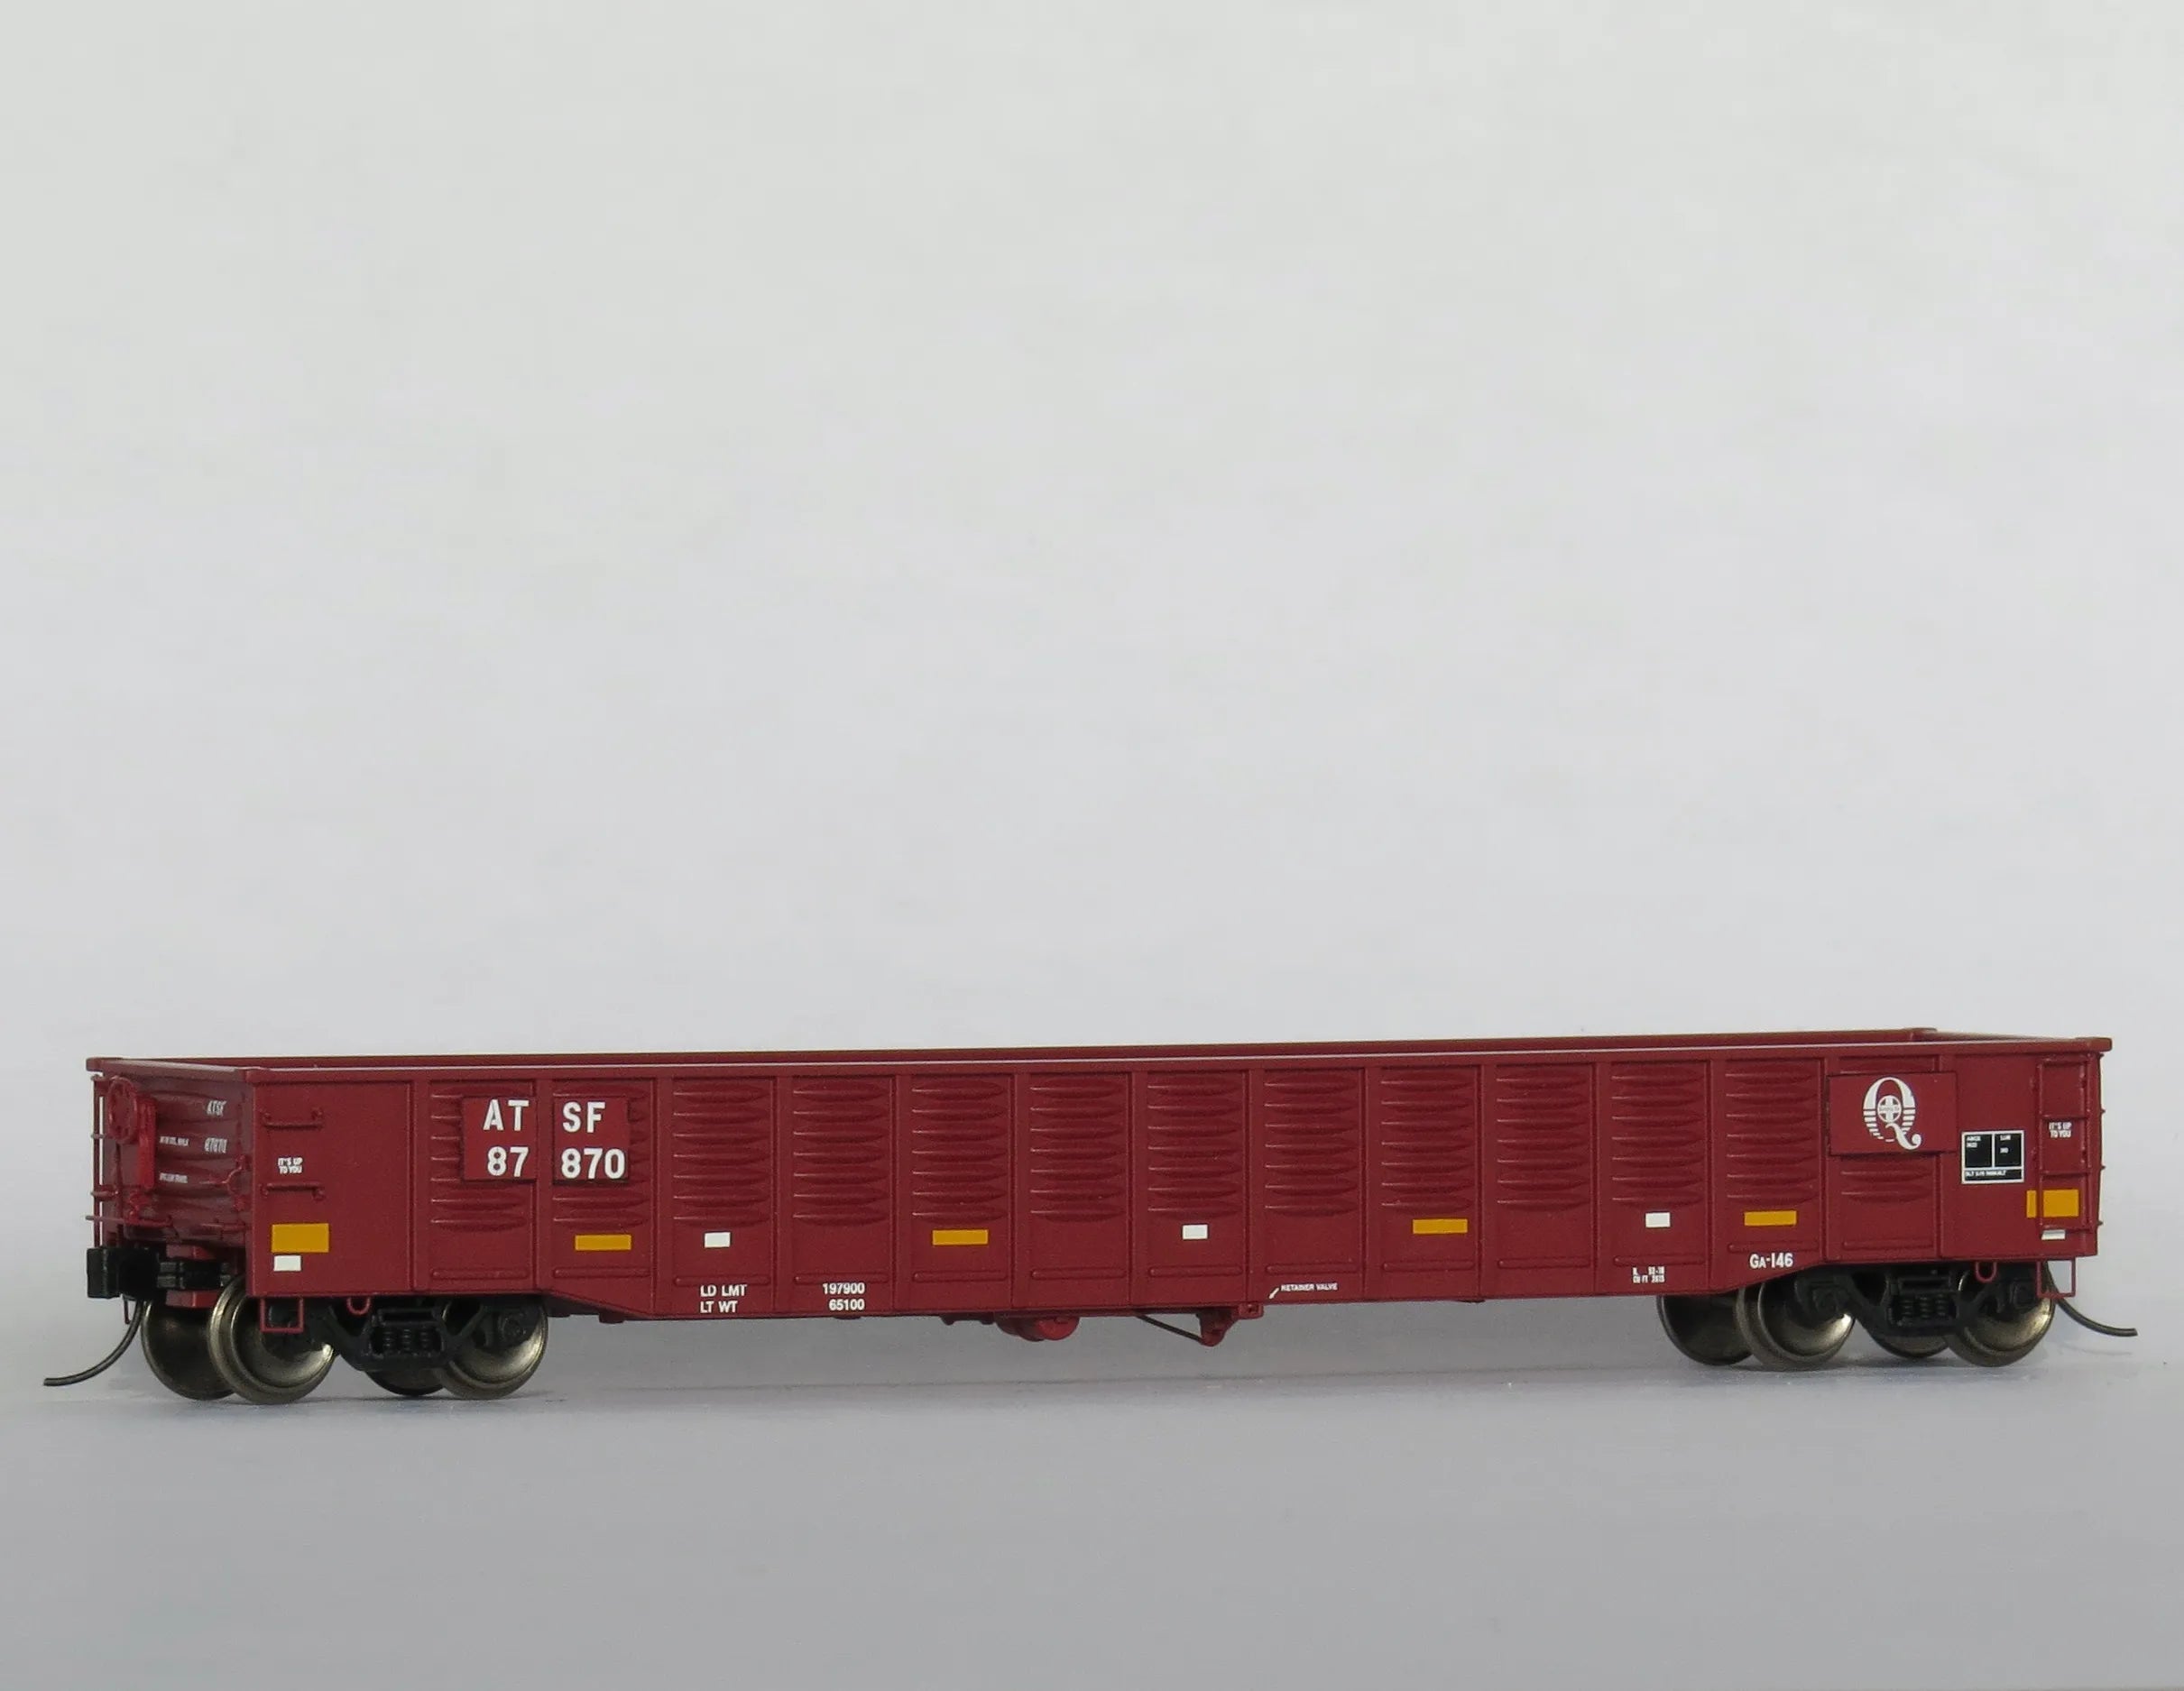 Trainworx 2522517 N Scale, 52' Gondola, Santa Fe #87914